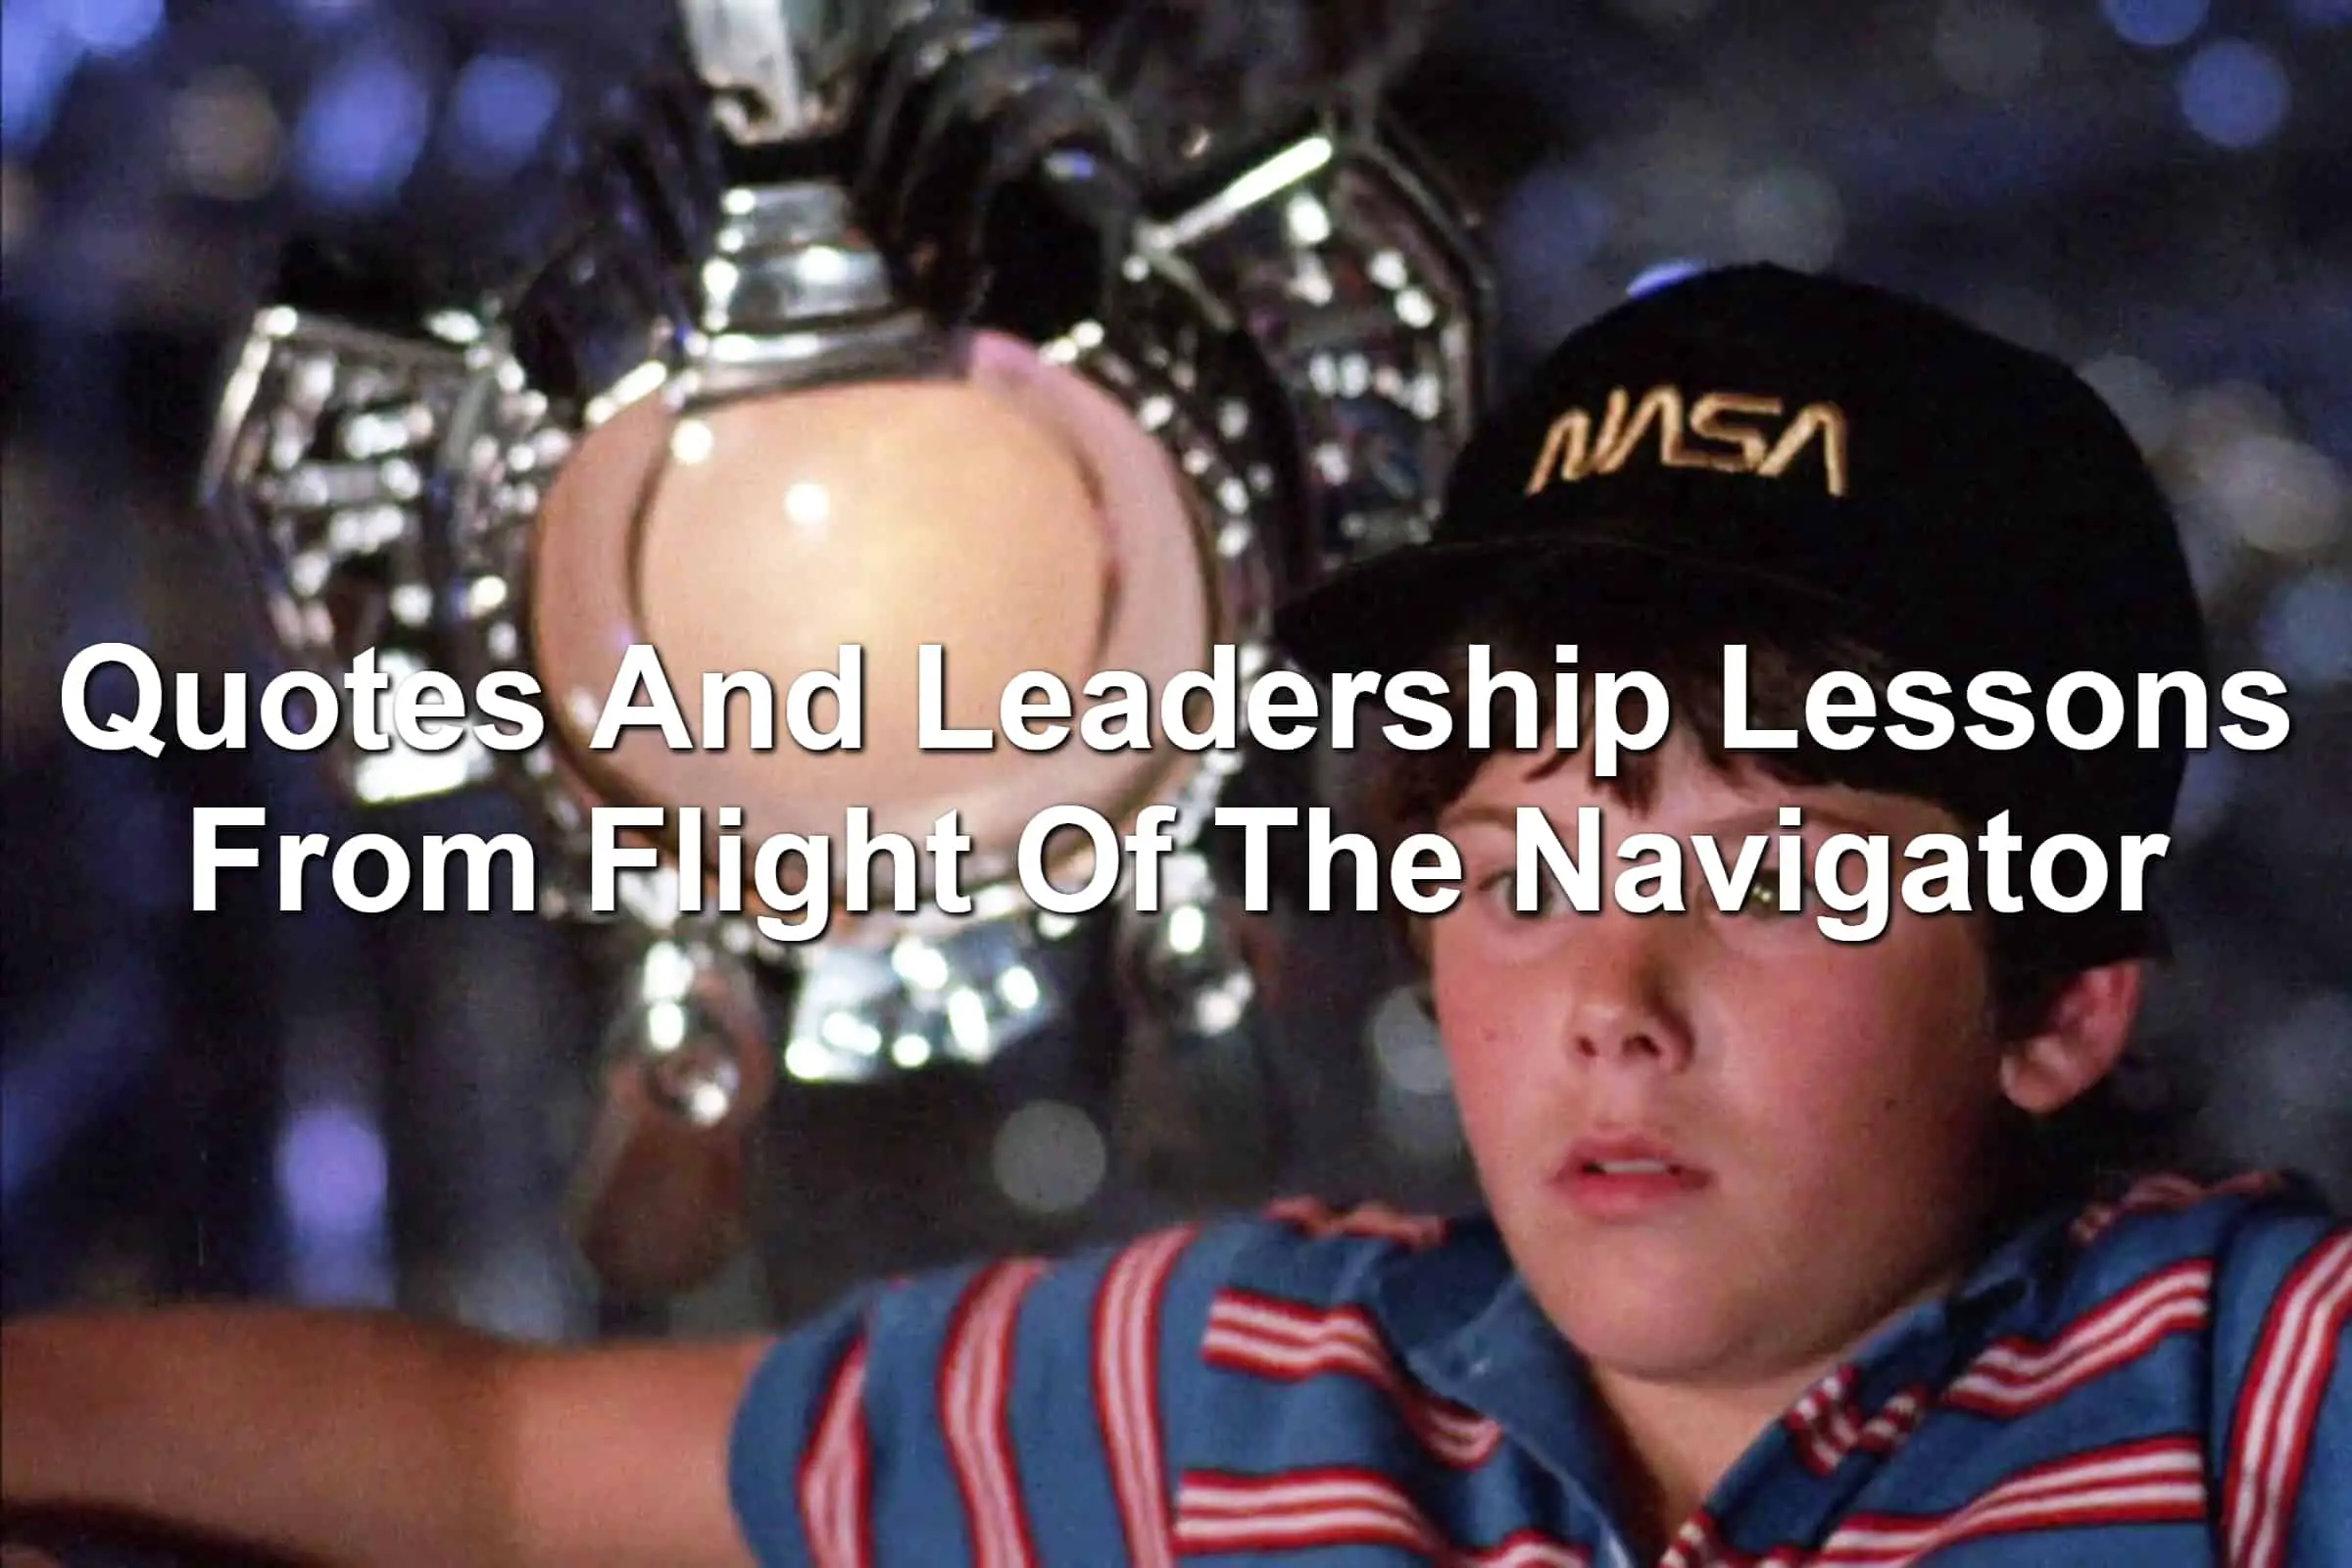 Joey Cramer in Flight Of The Navigator